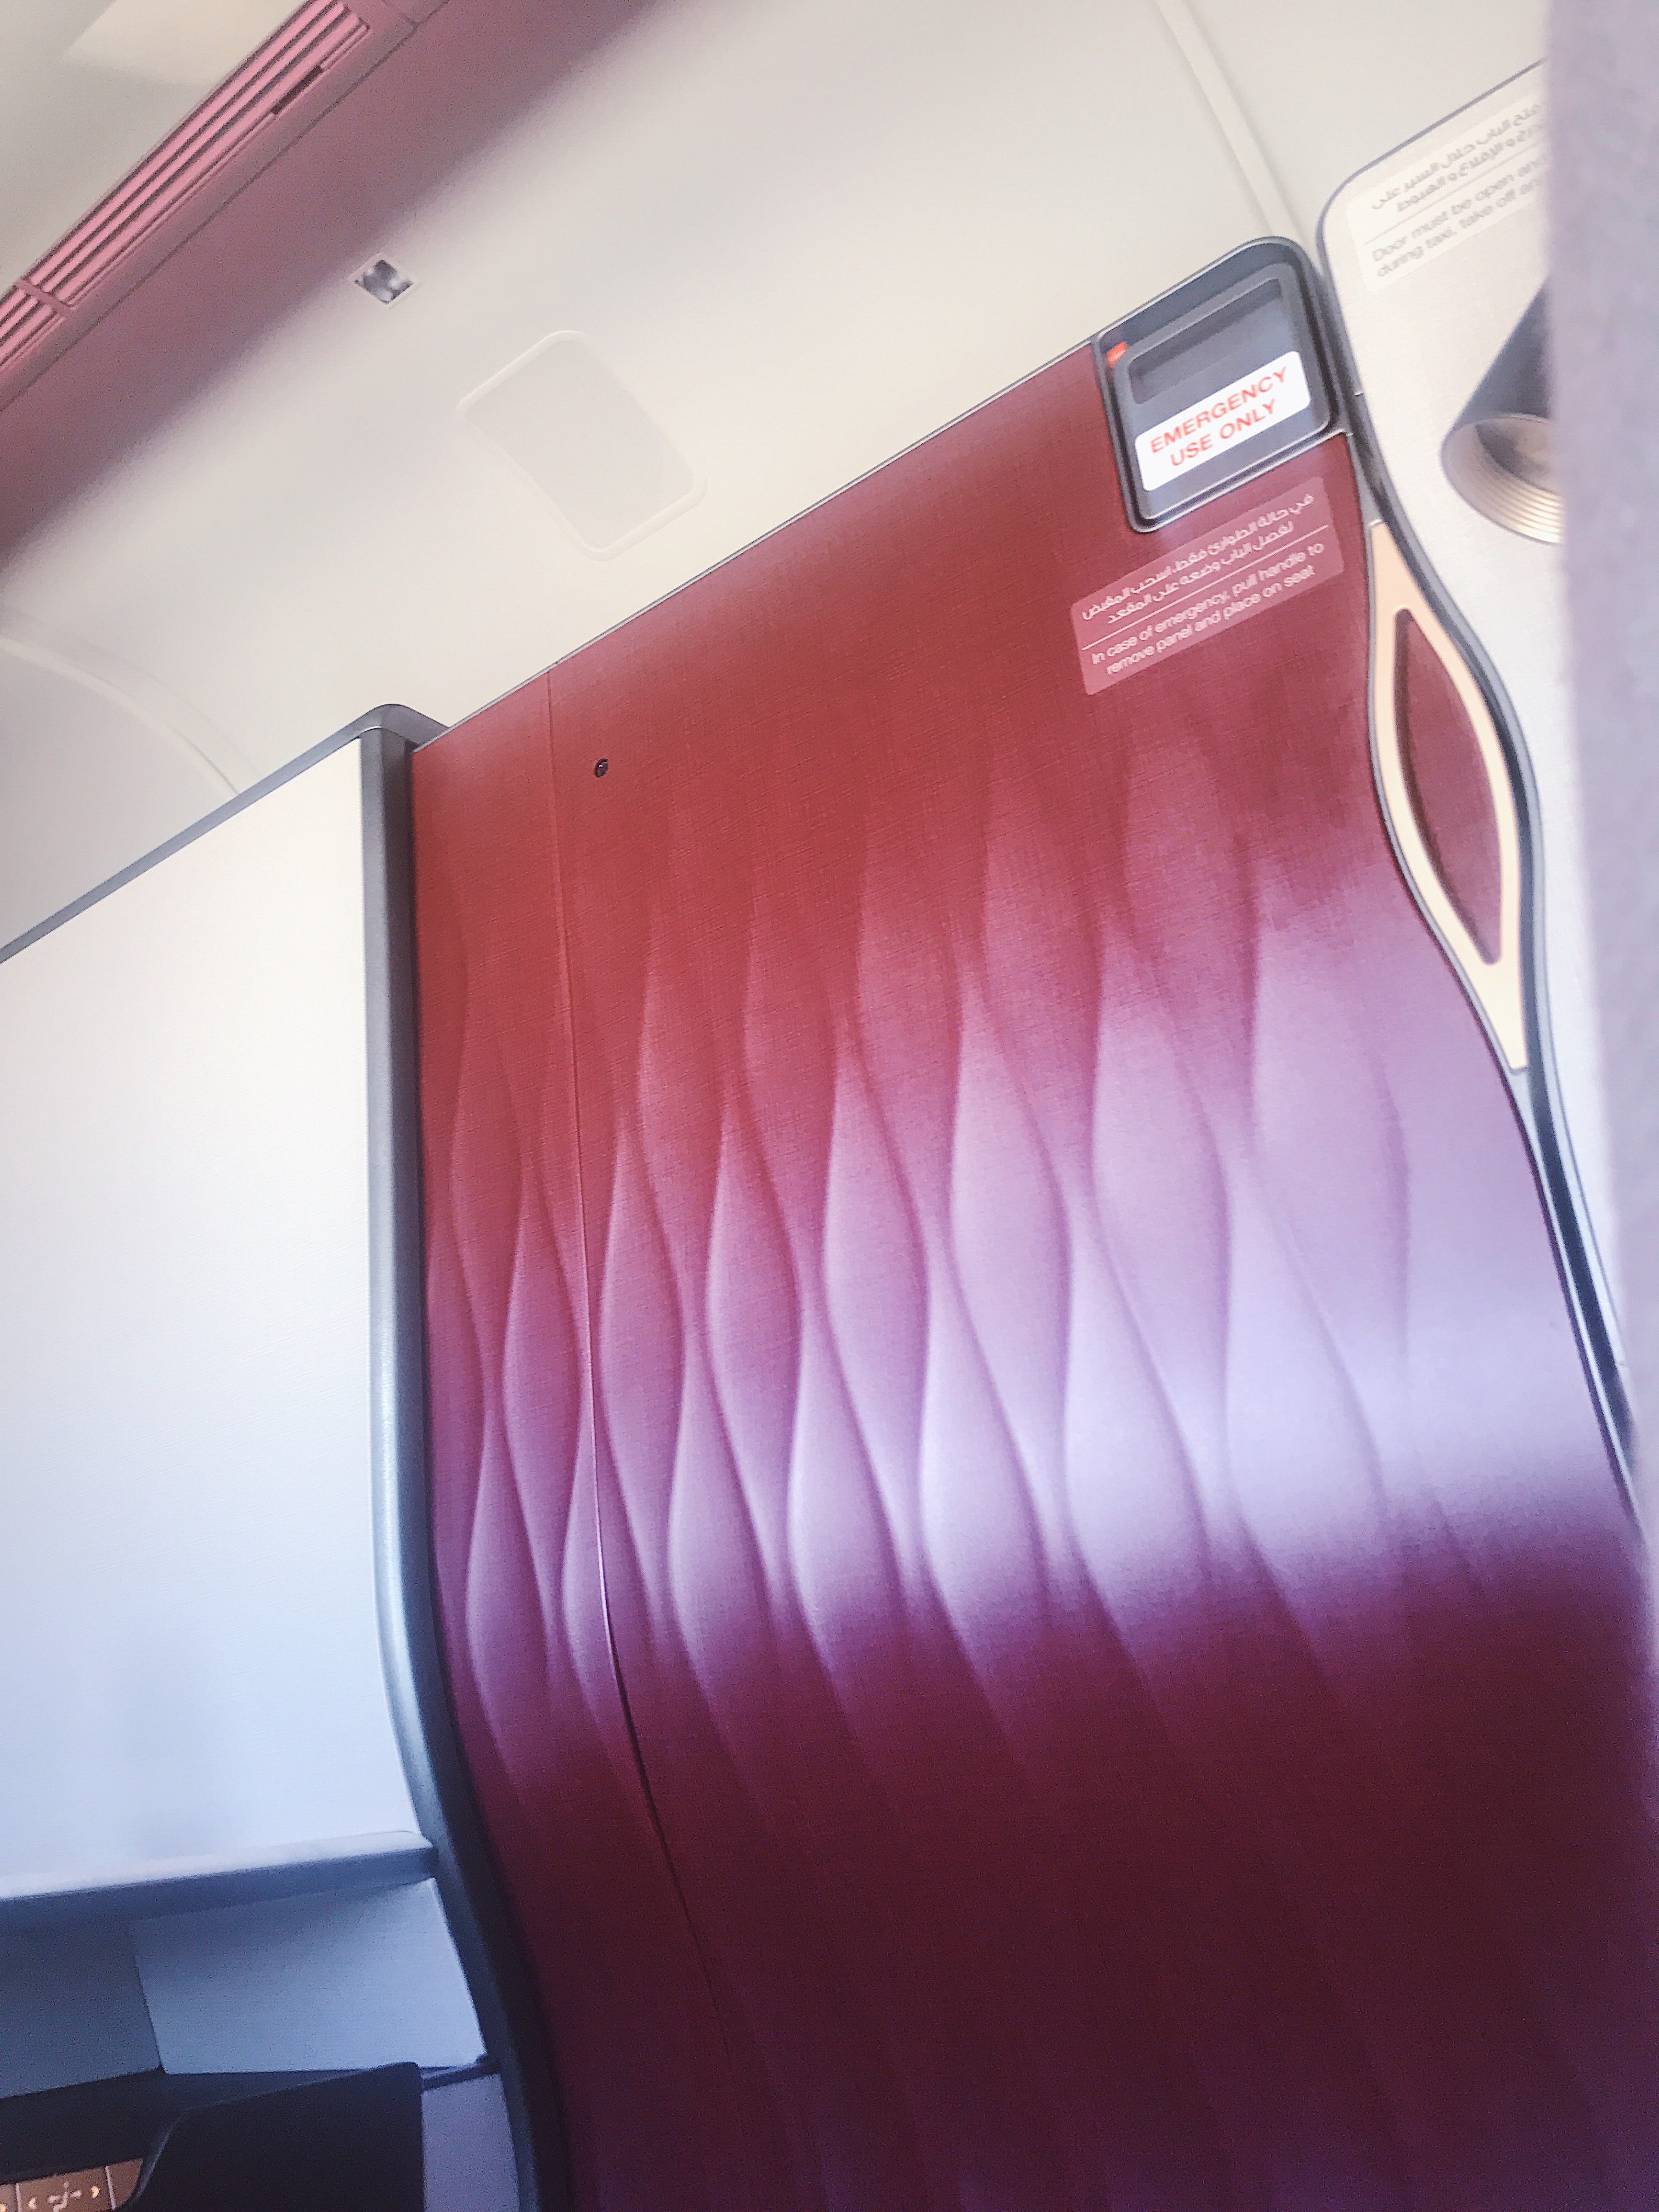 Qatar Airways' QSuite sliding privacy door